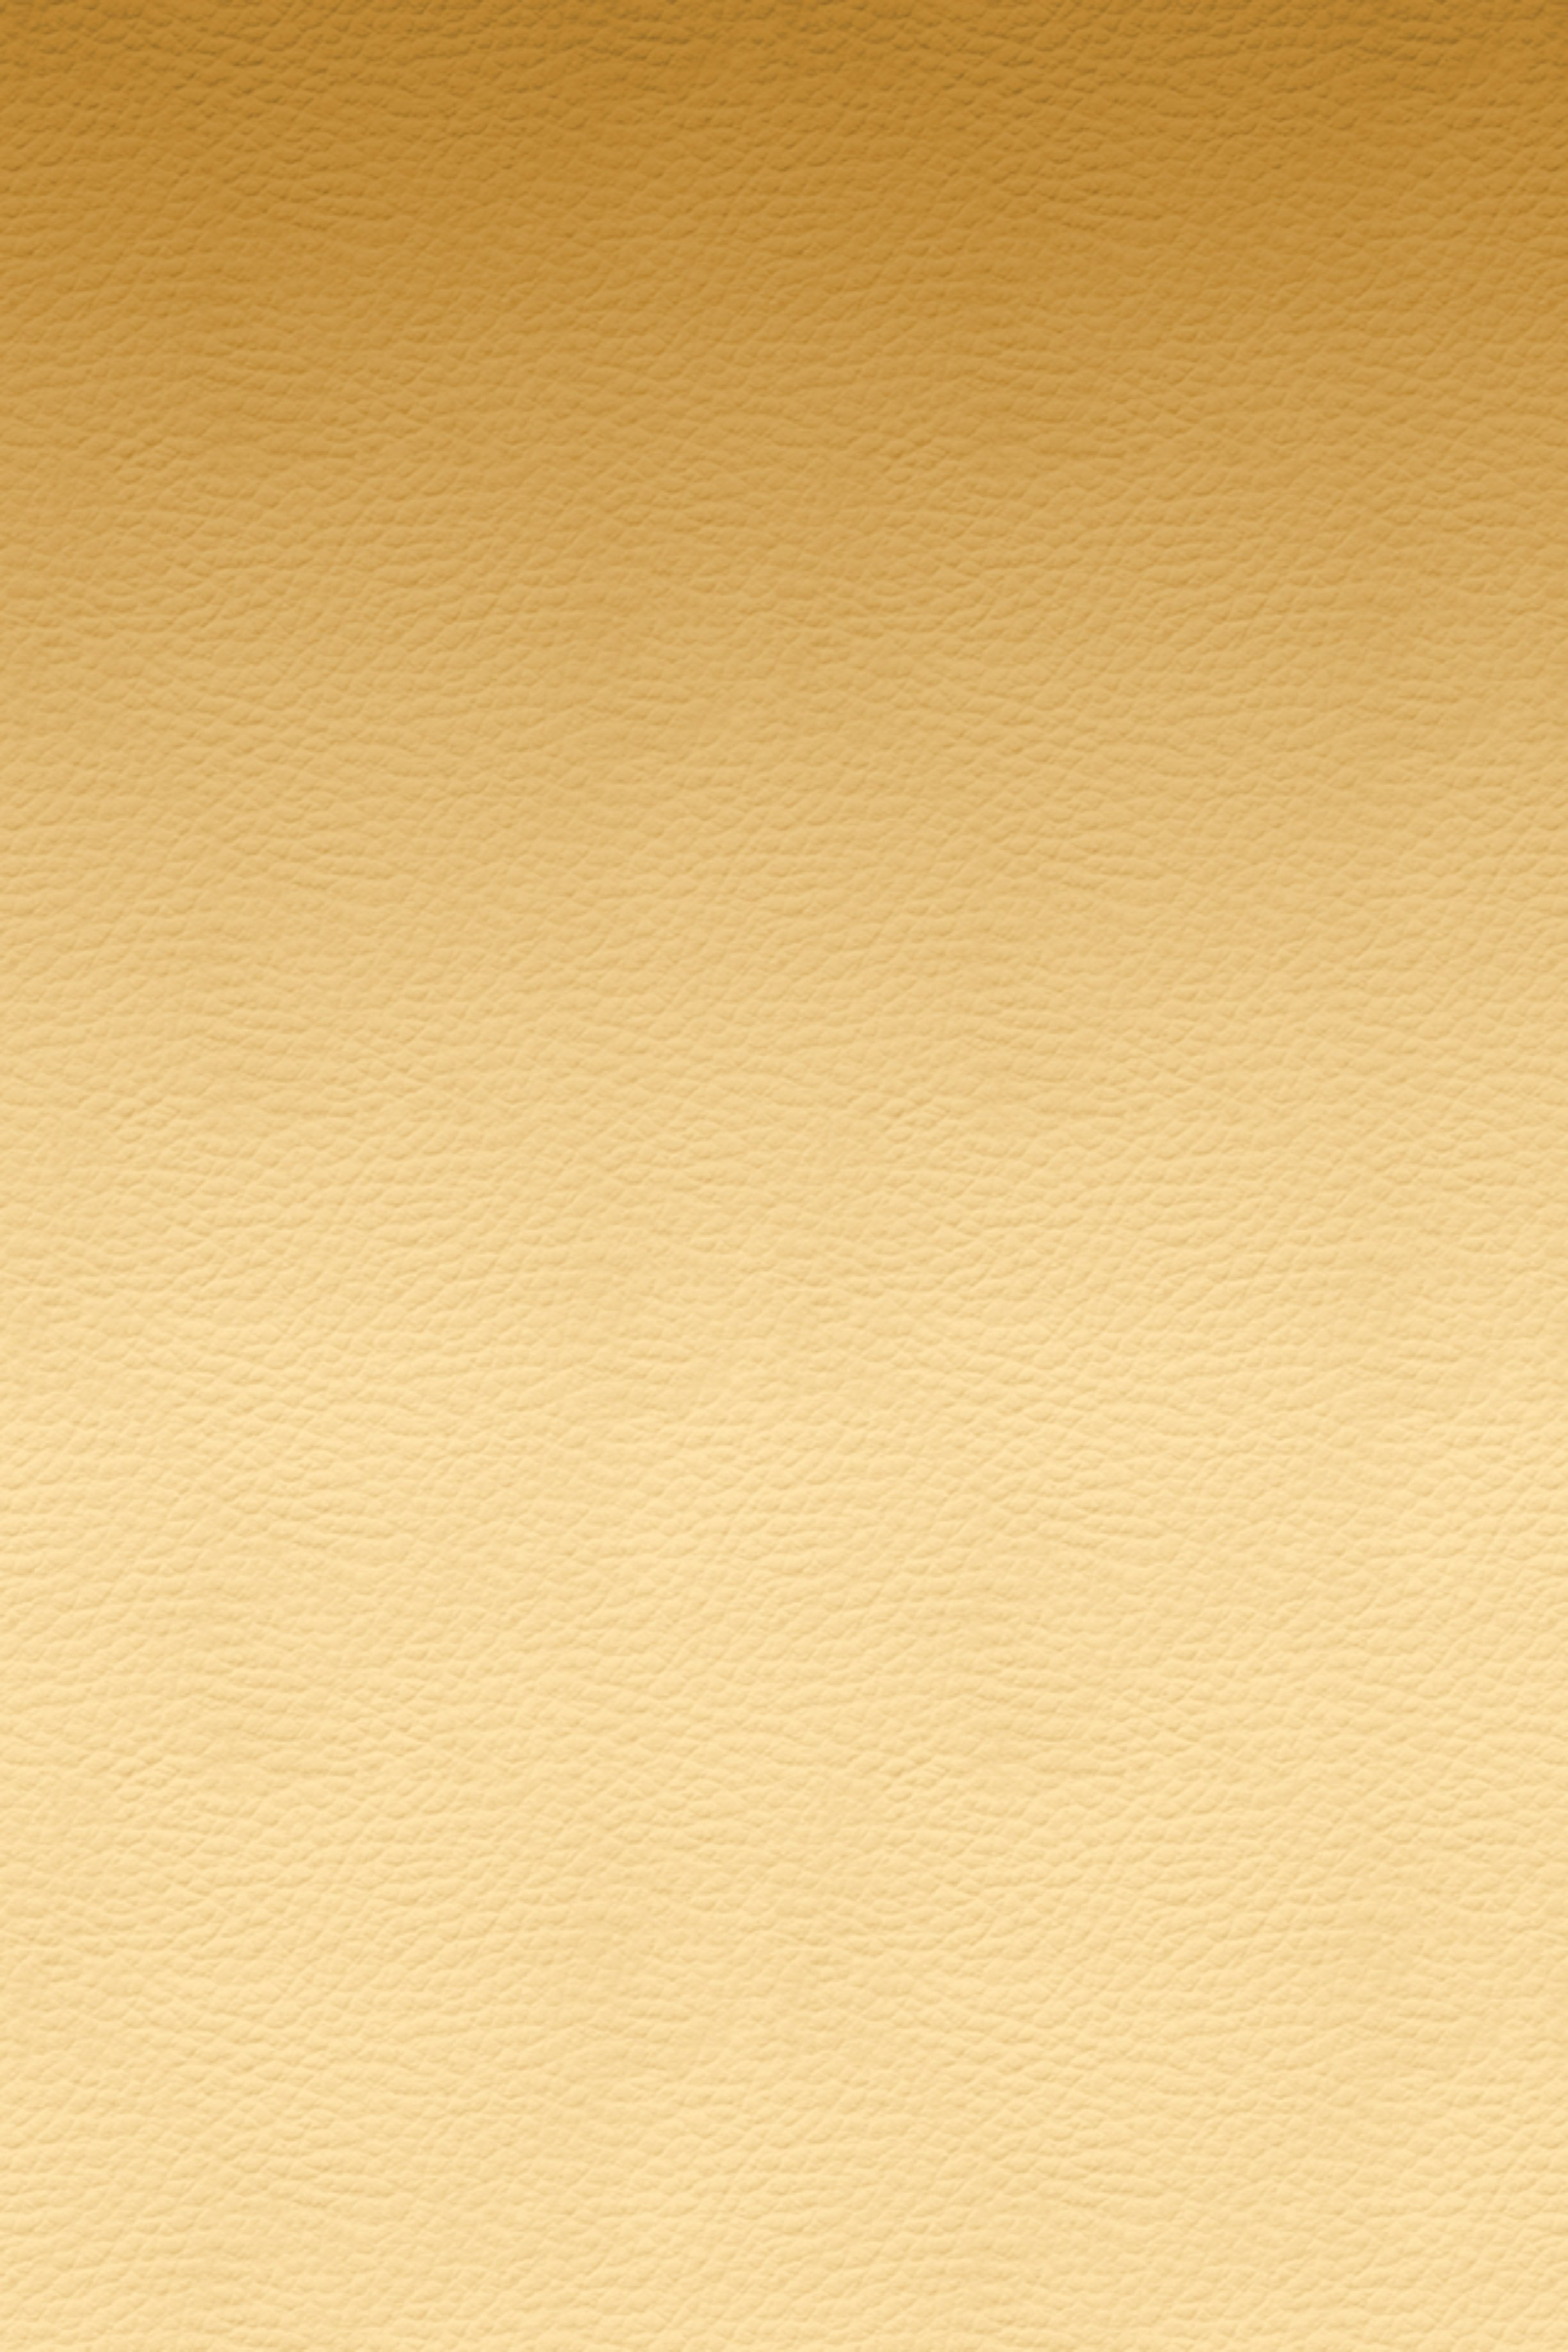 Ios7 Leather Gold Parallax HD iPhone iPad Wallpaper